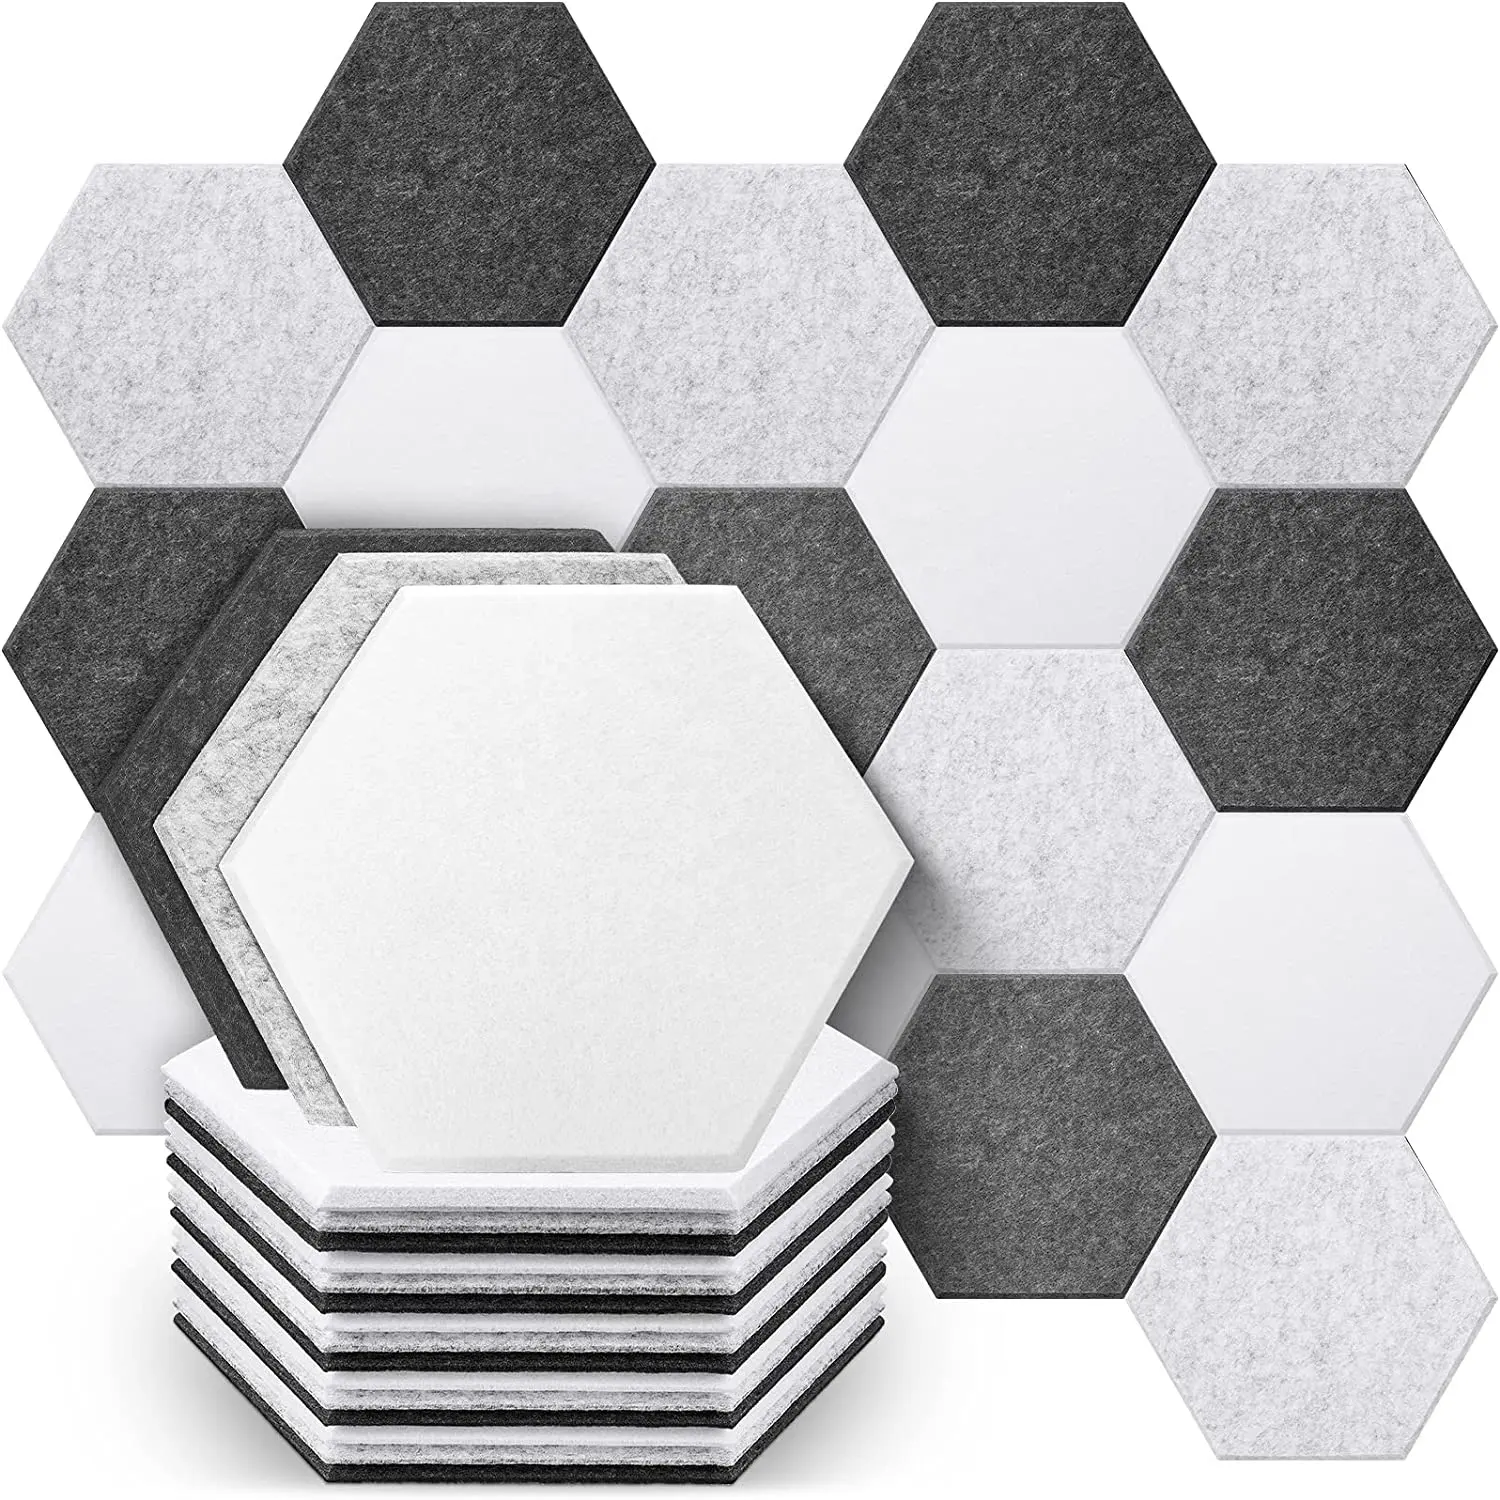 Felt Sound Proofing Padding Beveled Edge Flame Retardant hexagon acoustic panel for Studio Home Office